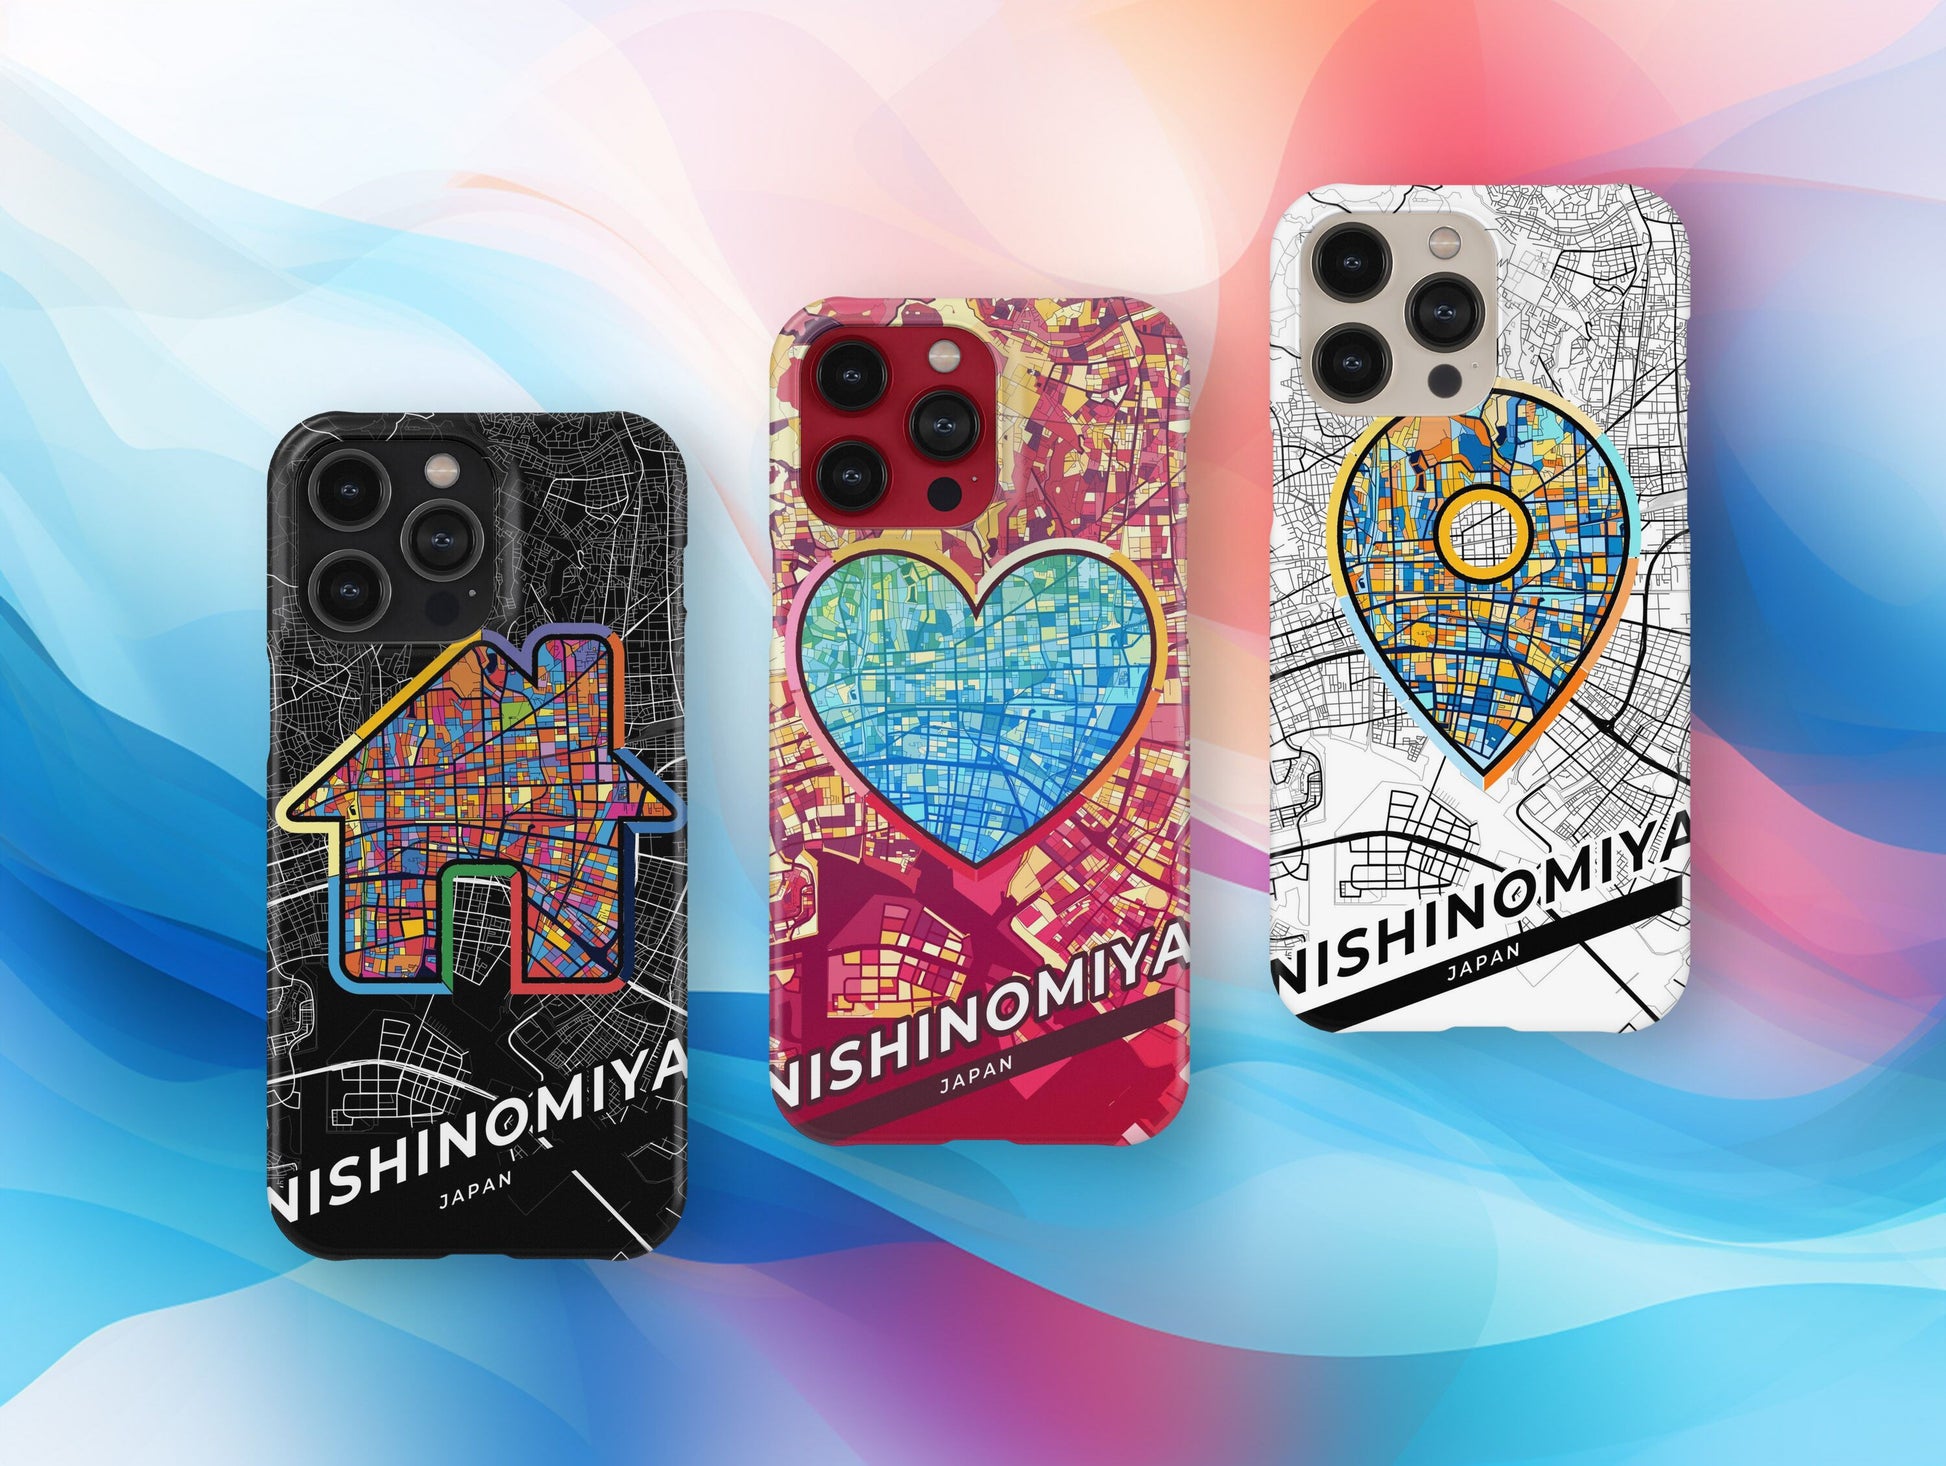 Nishinomiya Japan slim phone case with colorful icon